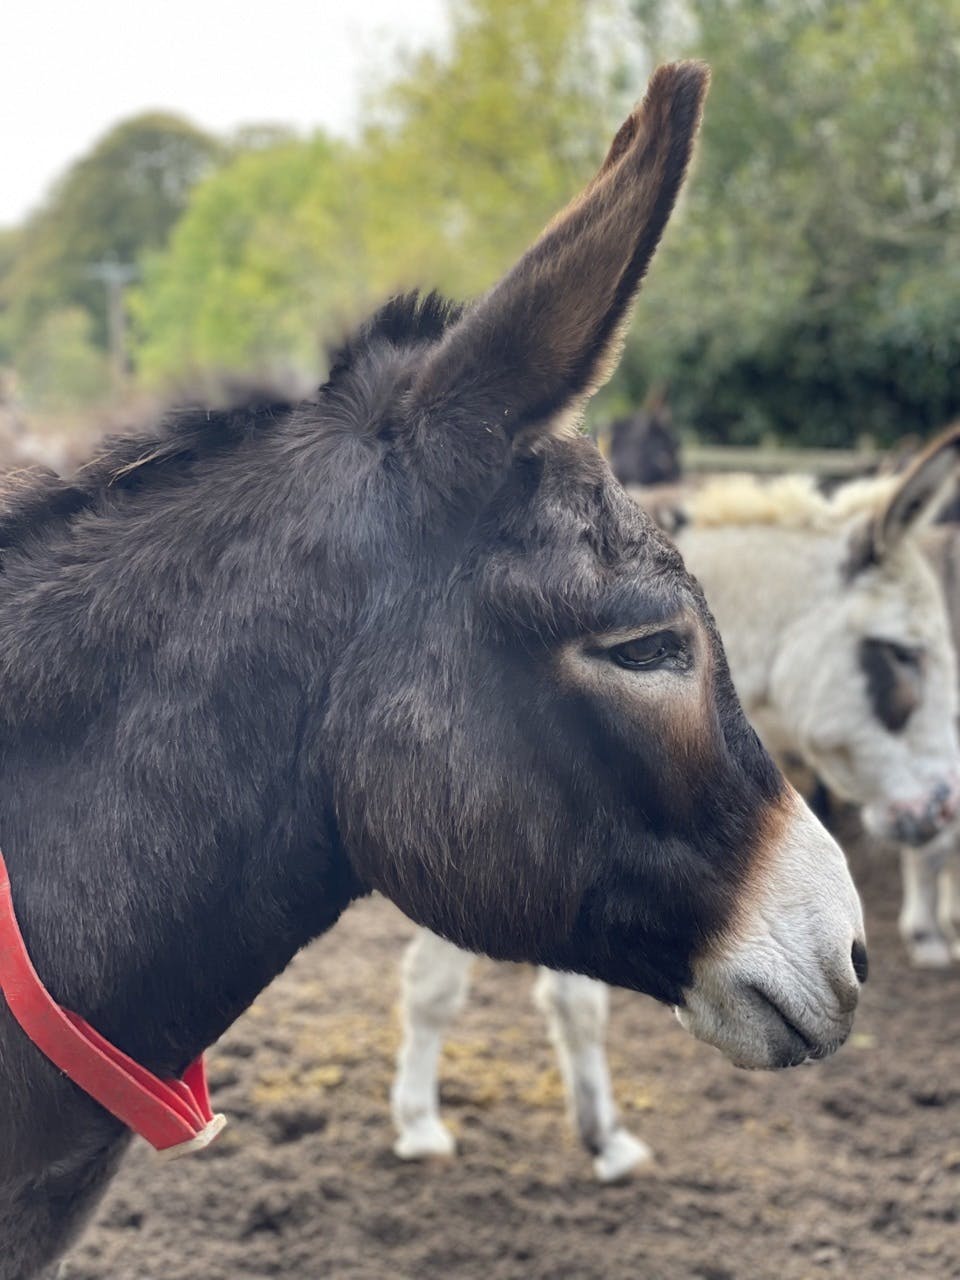 A donkey at The Donkey Sanctuary